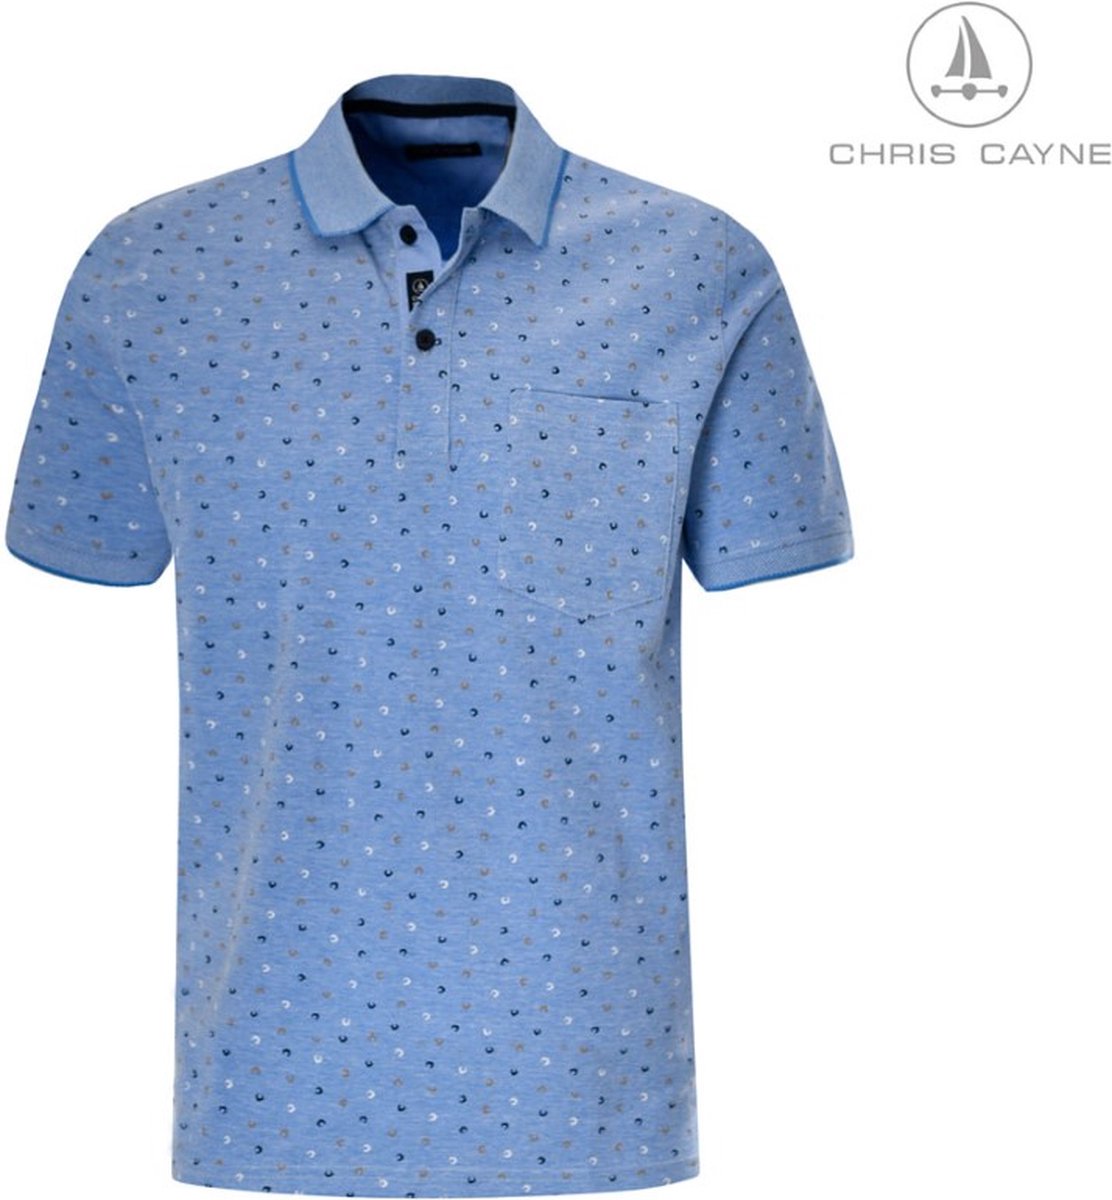 Chris Cayne heren poloshirt - polo heren - 3052 - blauw print - korte mouwen - maat L